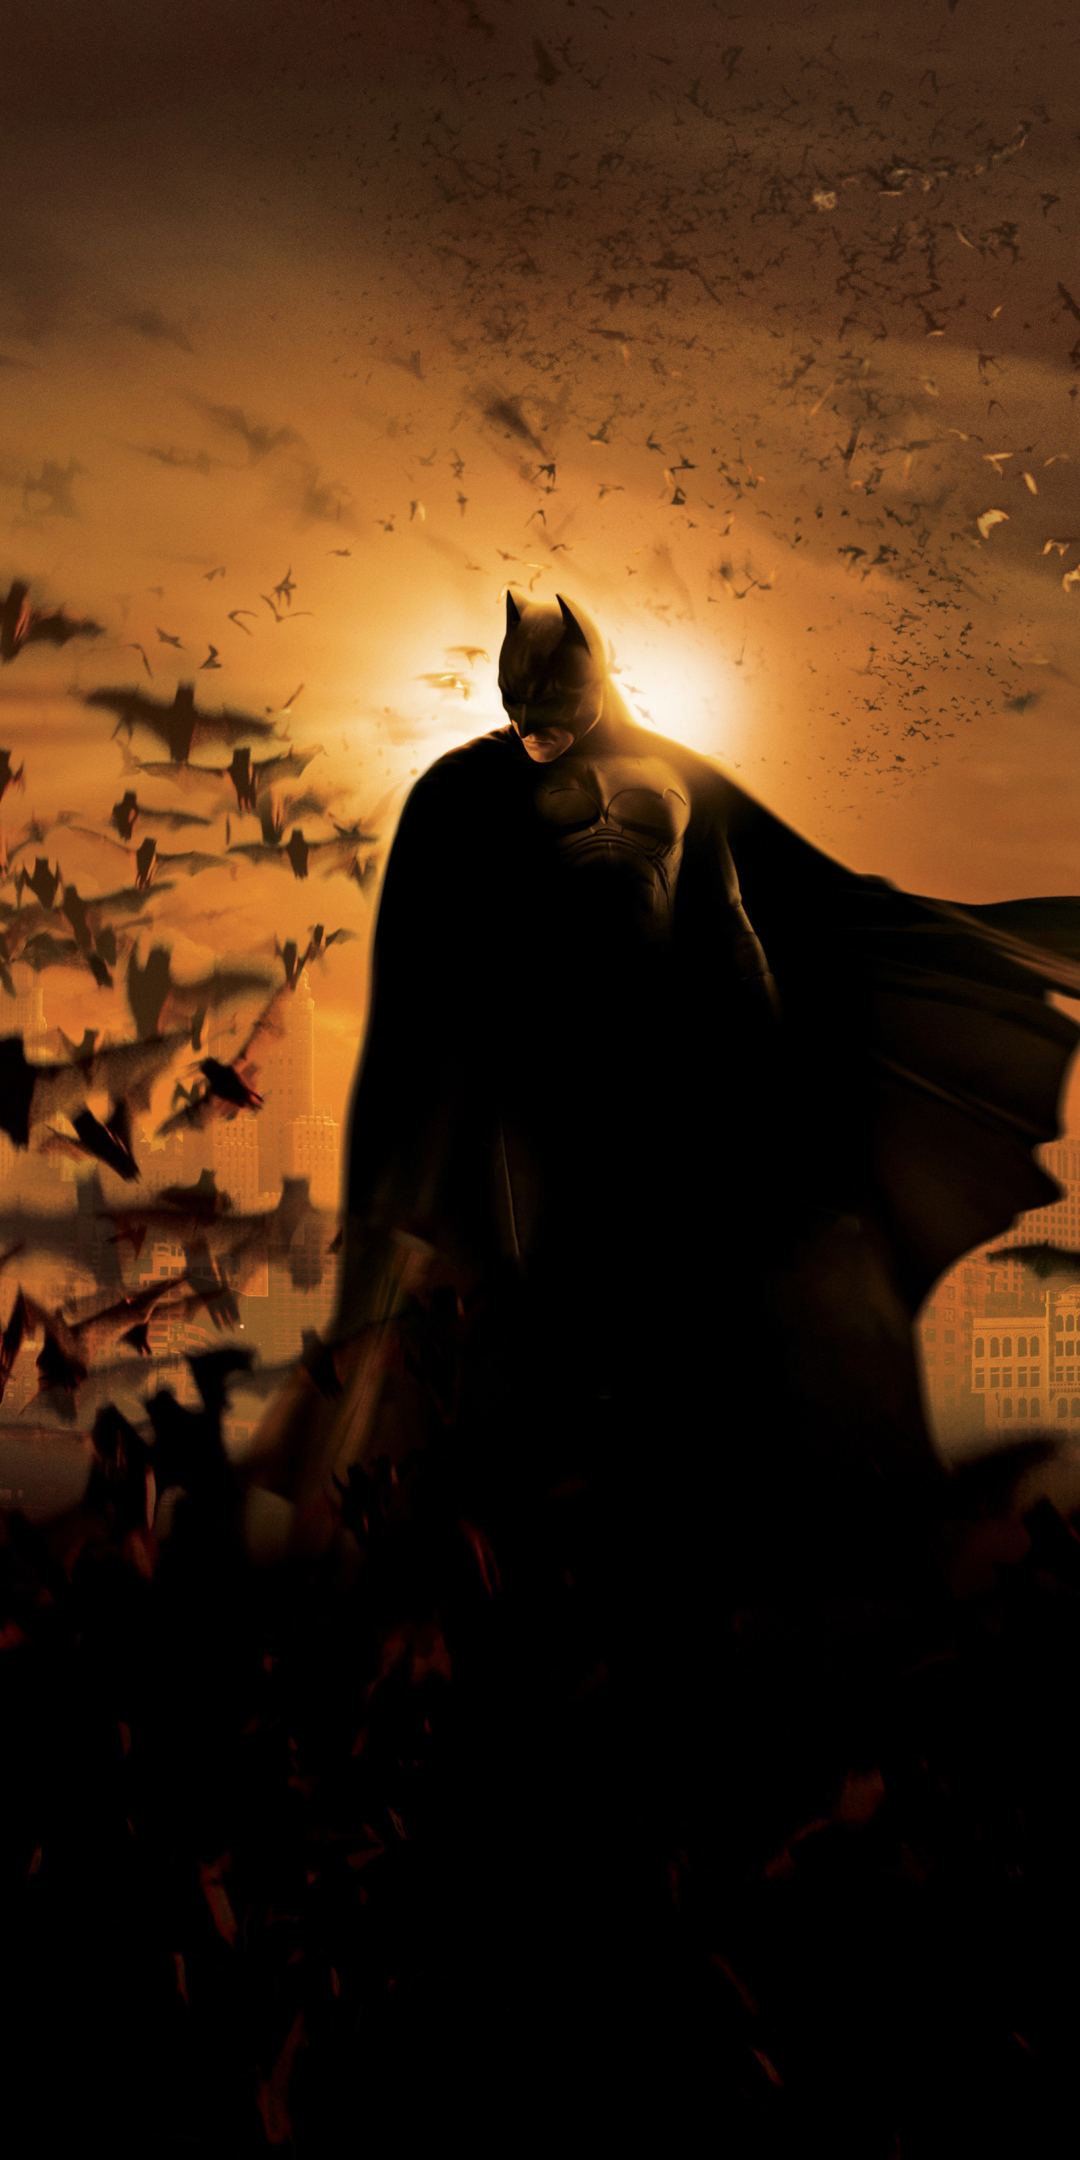 gotham city, bruce wayne, movie, batman begins, batman, superhero, bat, dc comics, night